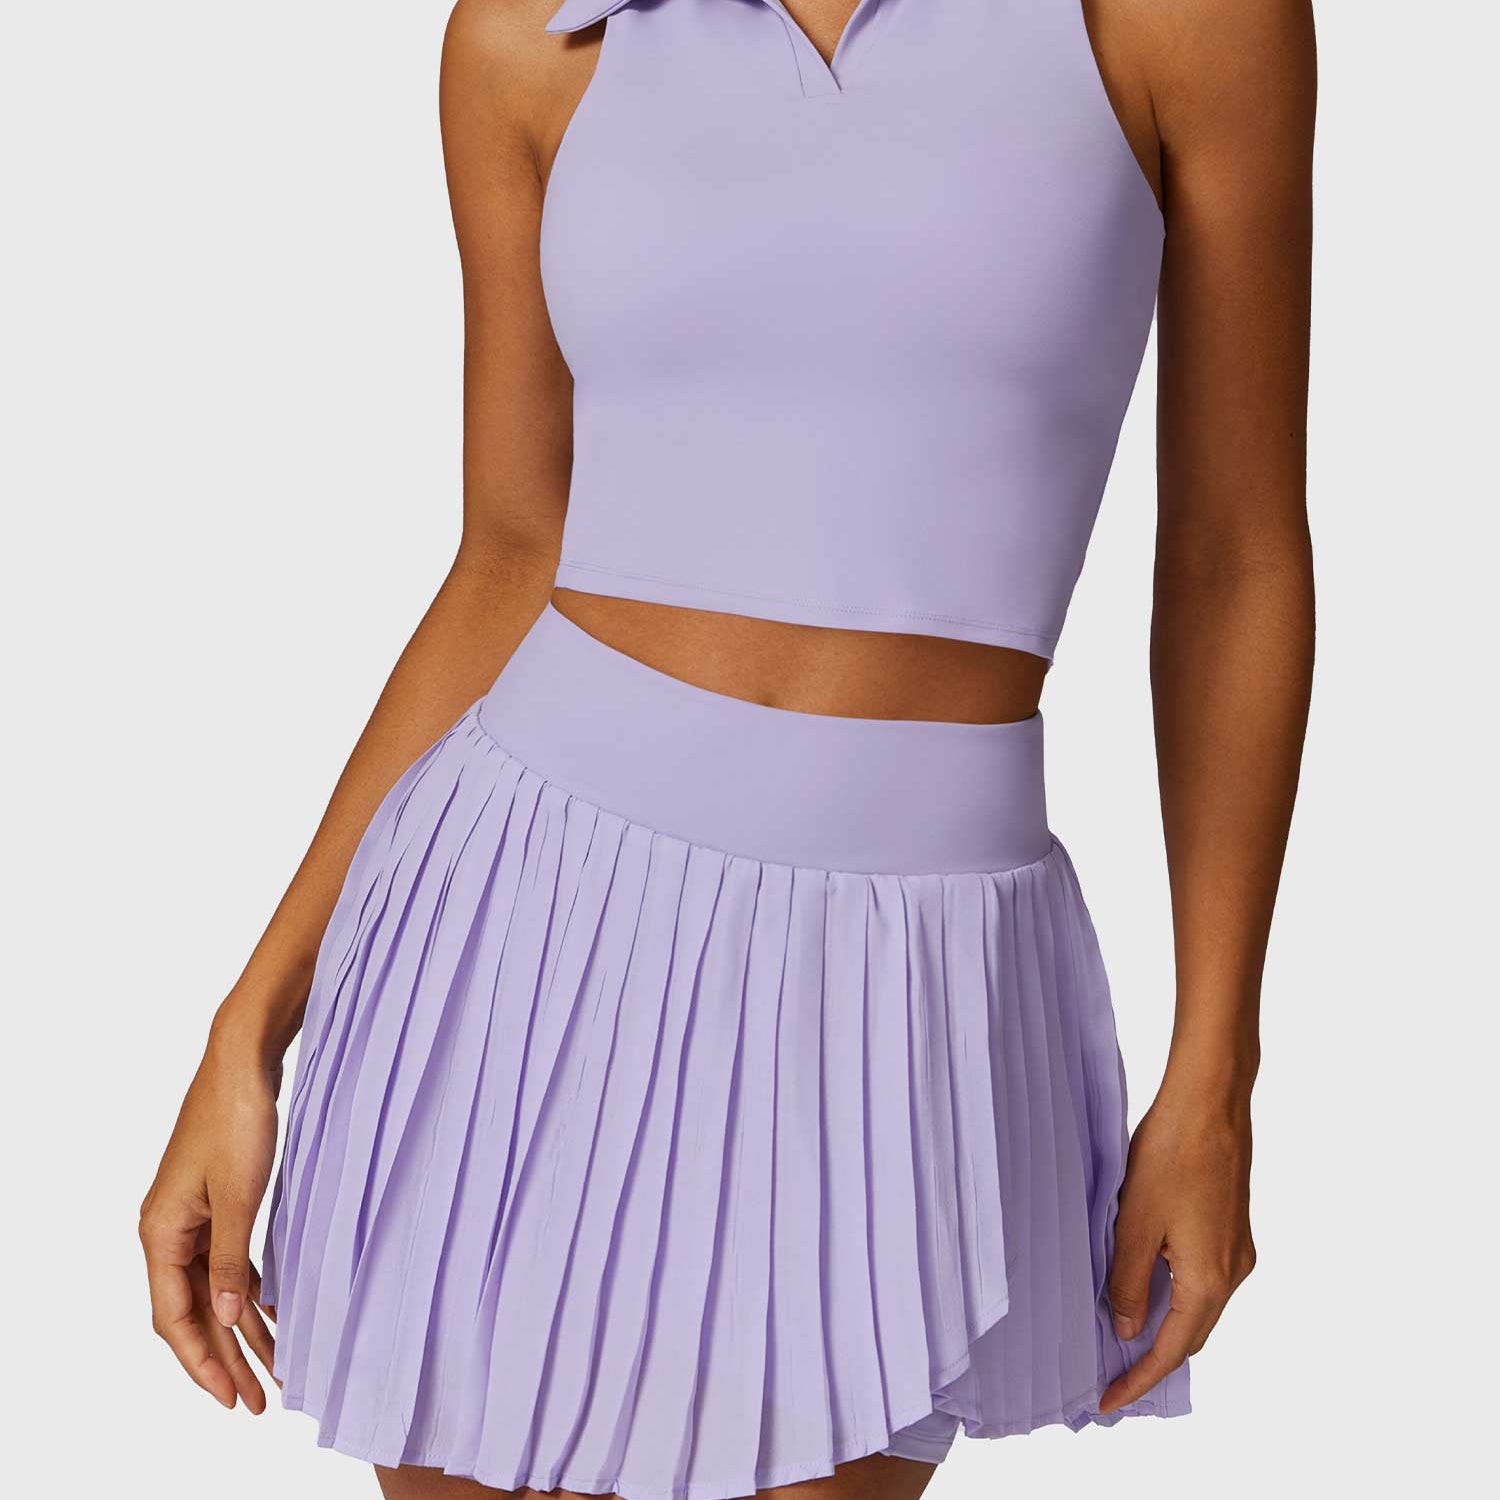 Yeoreo Crop Top Tennis Skirt Sets